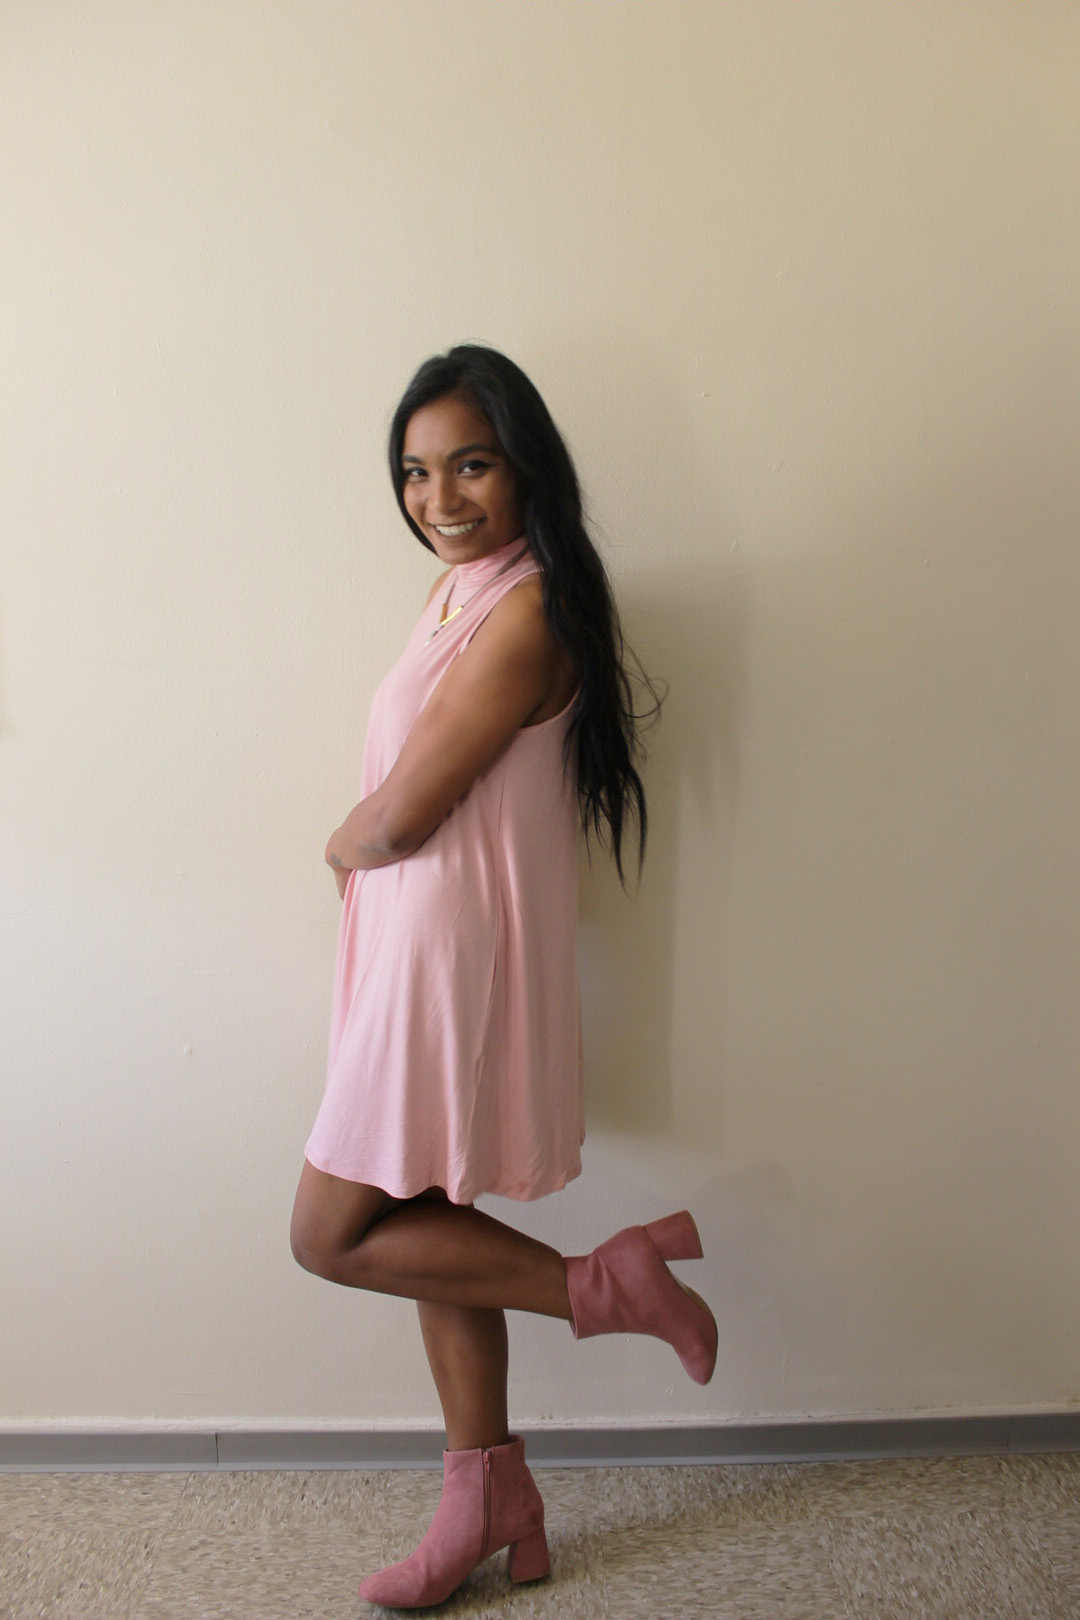 Pink-on-pink-style-blogger-fashionista-LINDATENCHITRAN-6-1616x1080